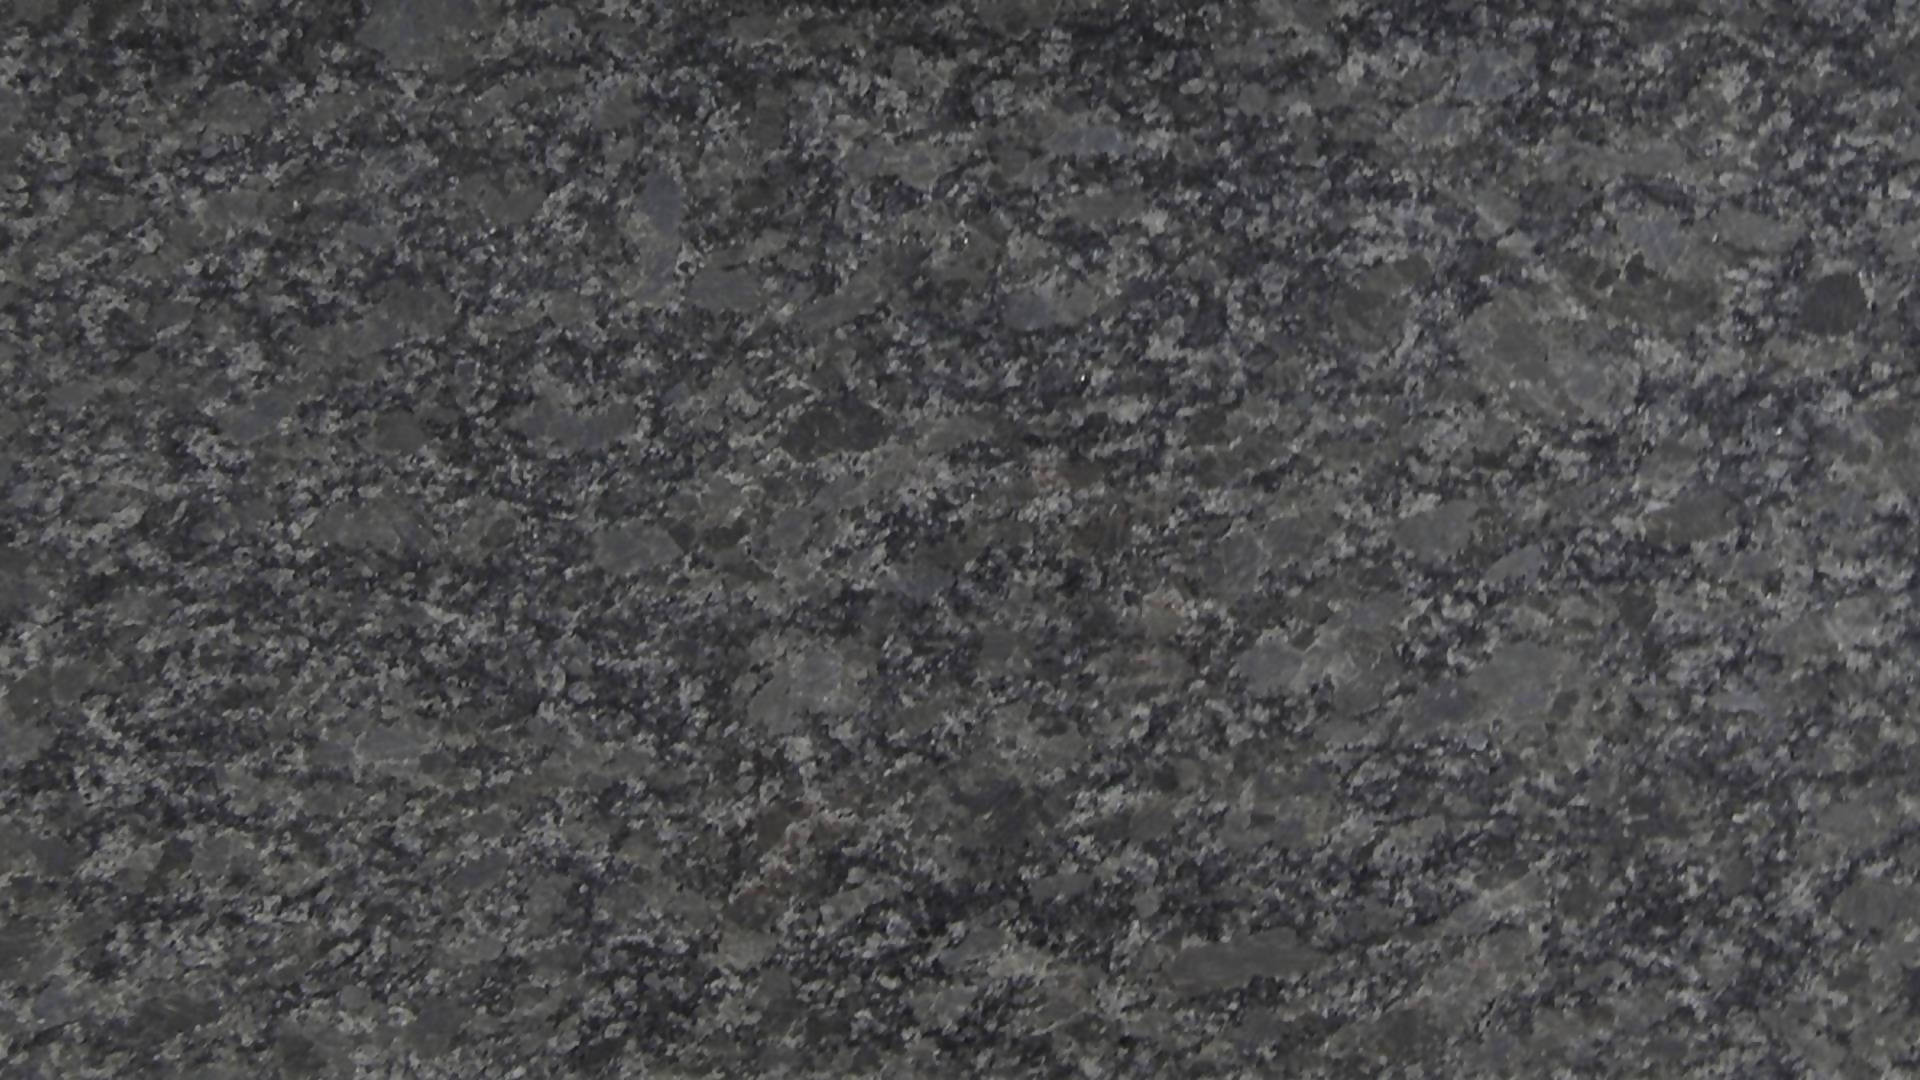 STEEL GREY GRANITE,Granite,Blyth Marble Ltd,www.work-tops.com